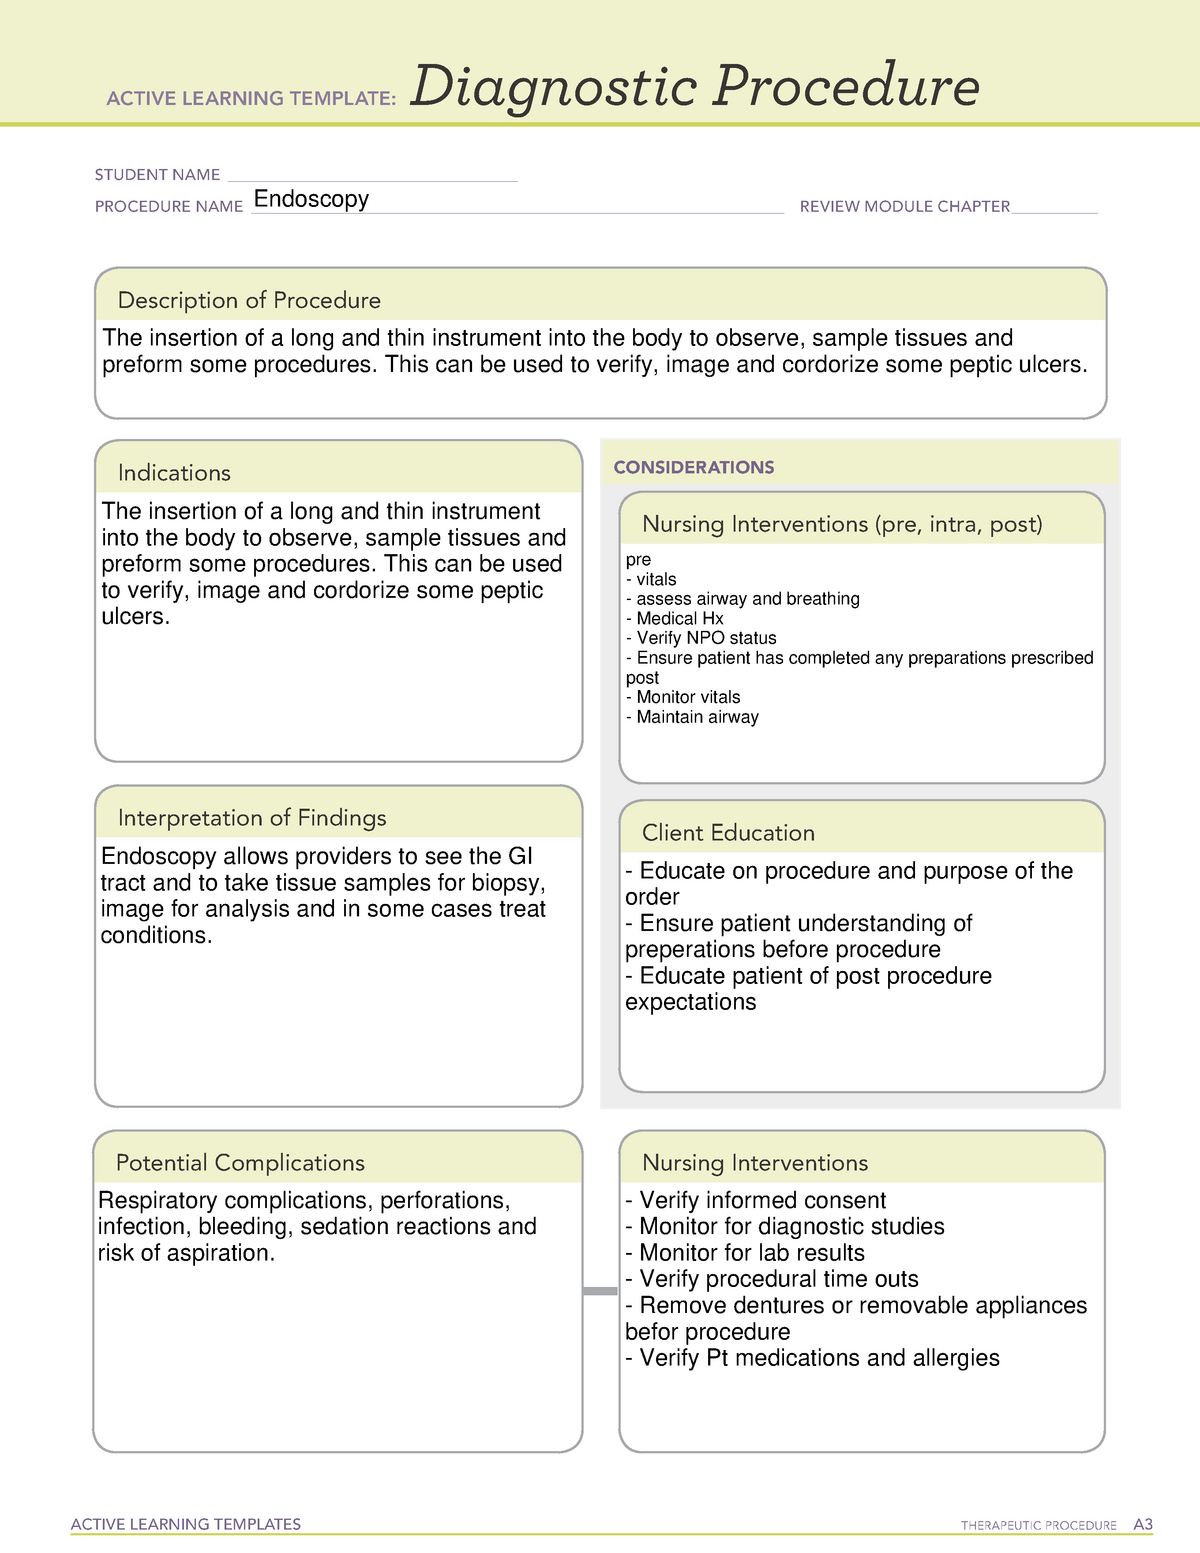 endoscopy-ati-diagnostic-procedure-active-learning-templates